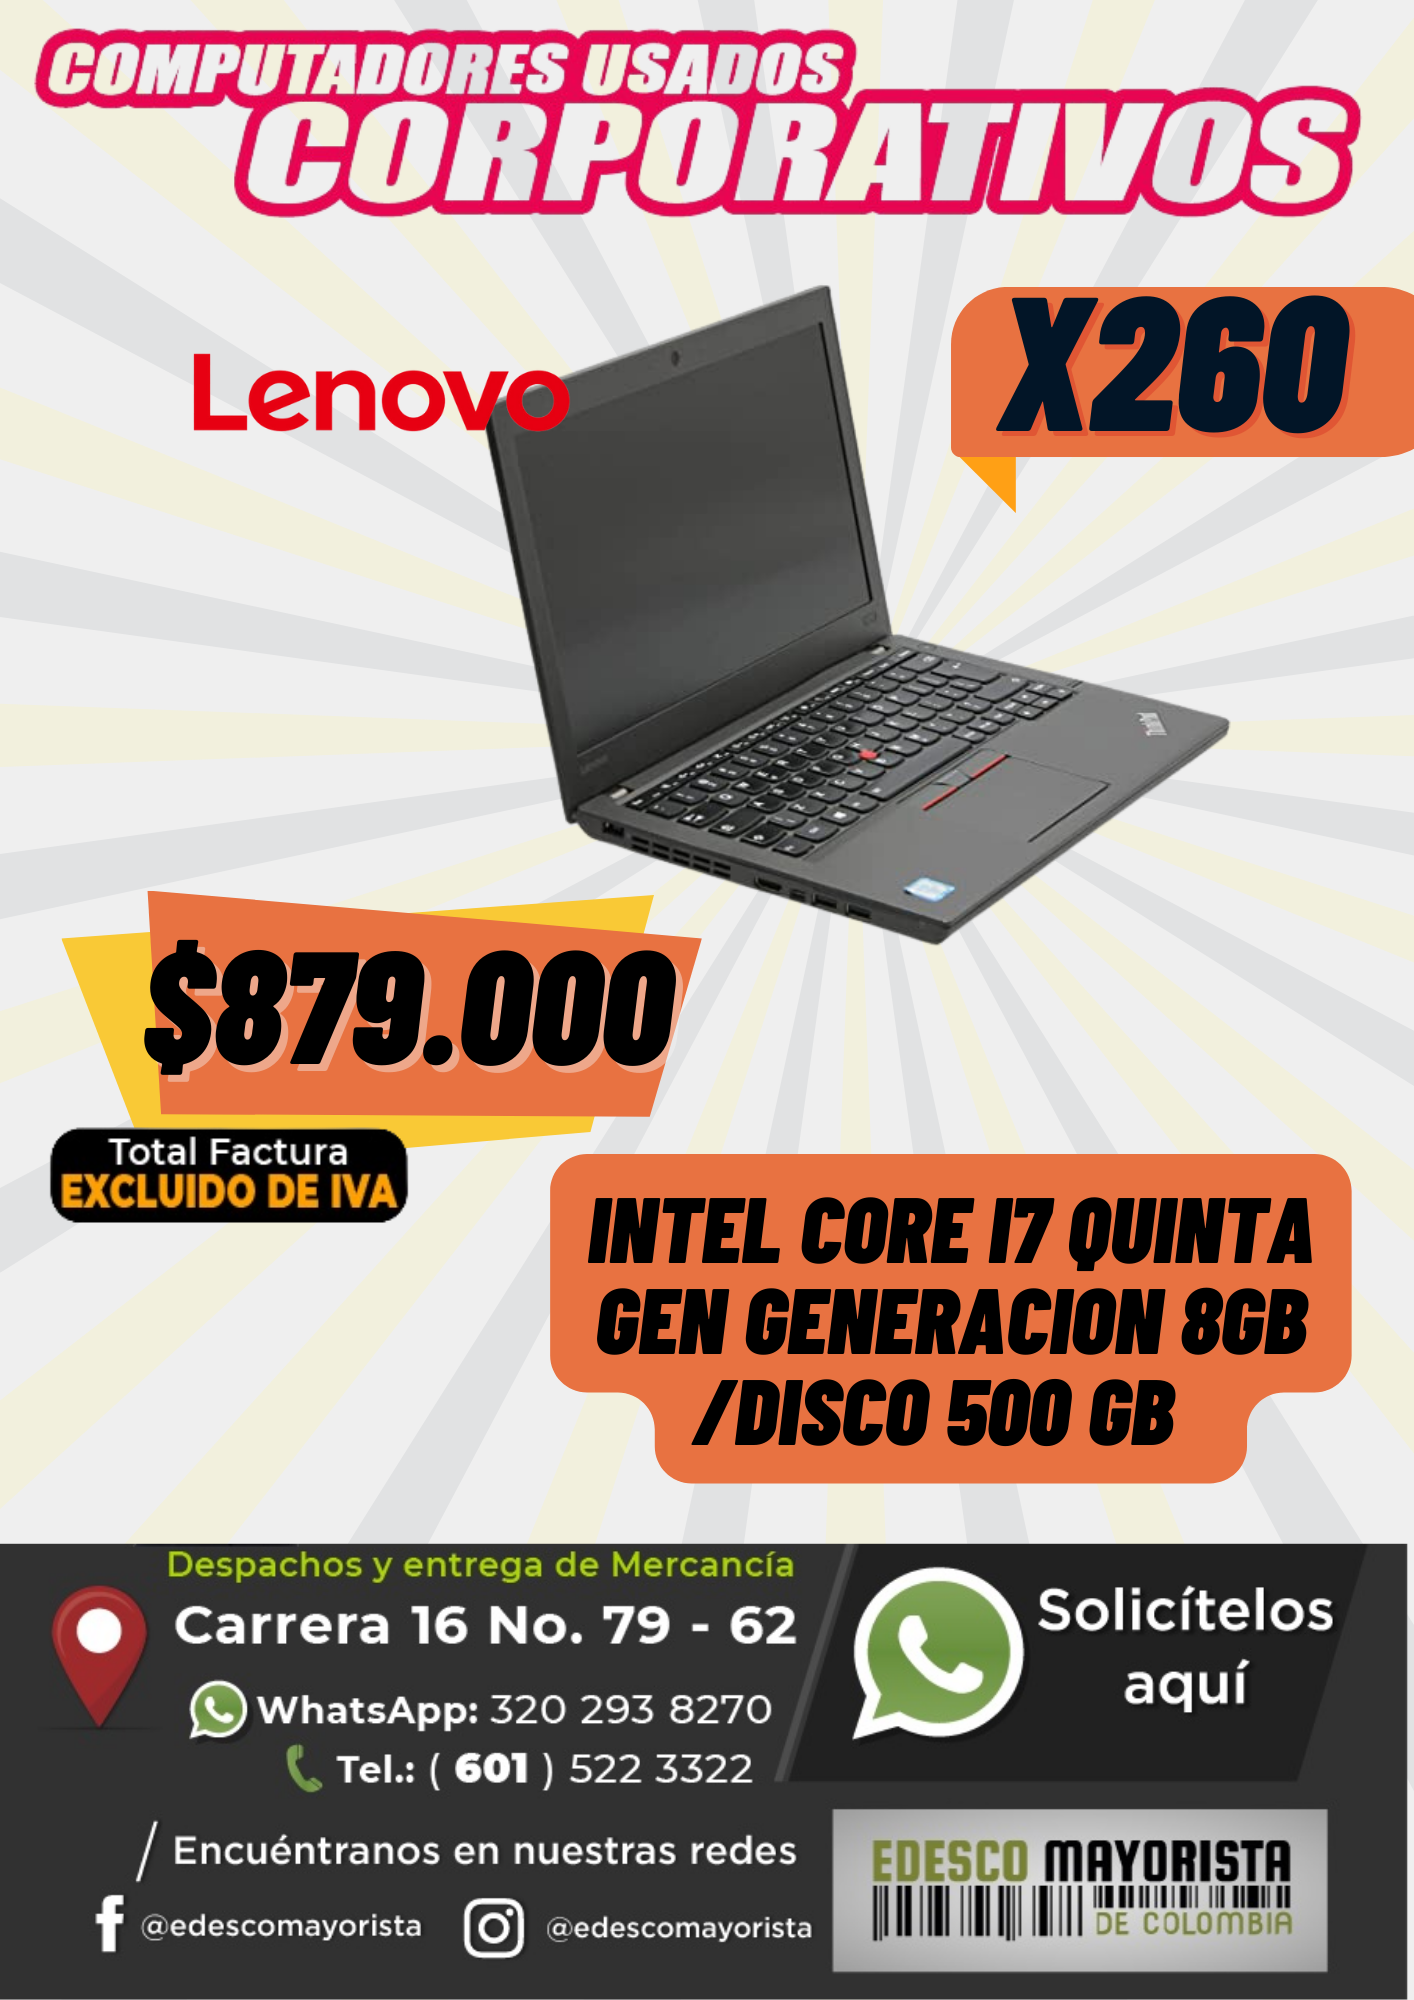 Lenovo X260 core i7